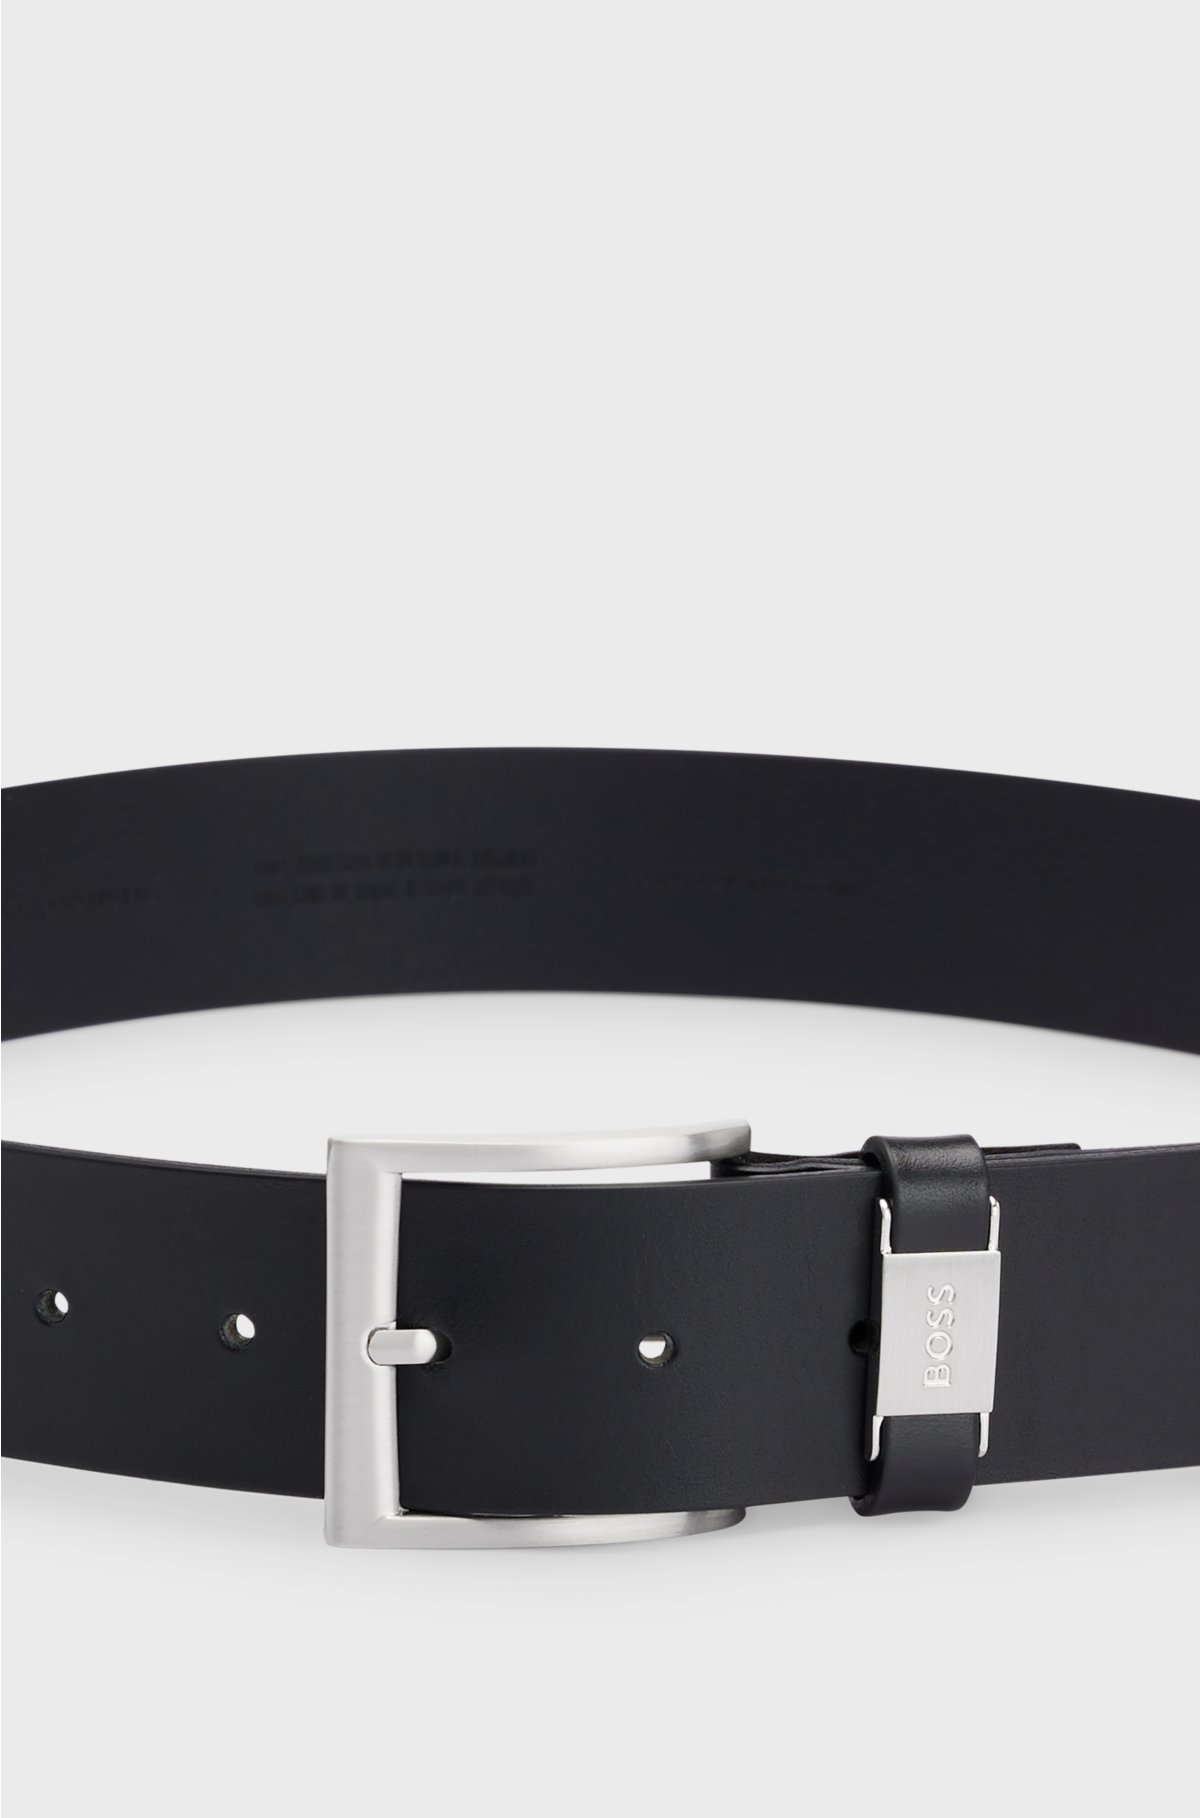 Italian-leather belt with logo keeper and brushed hardware, Black